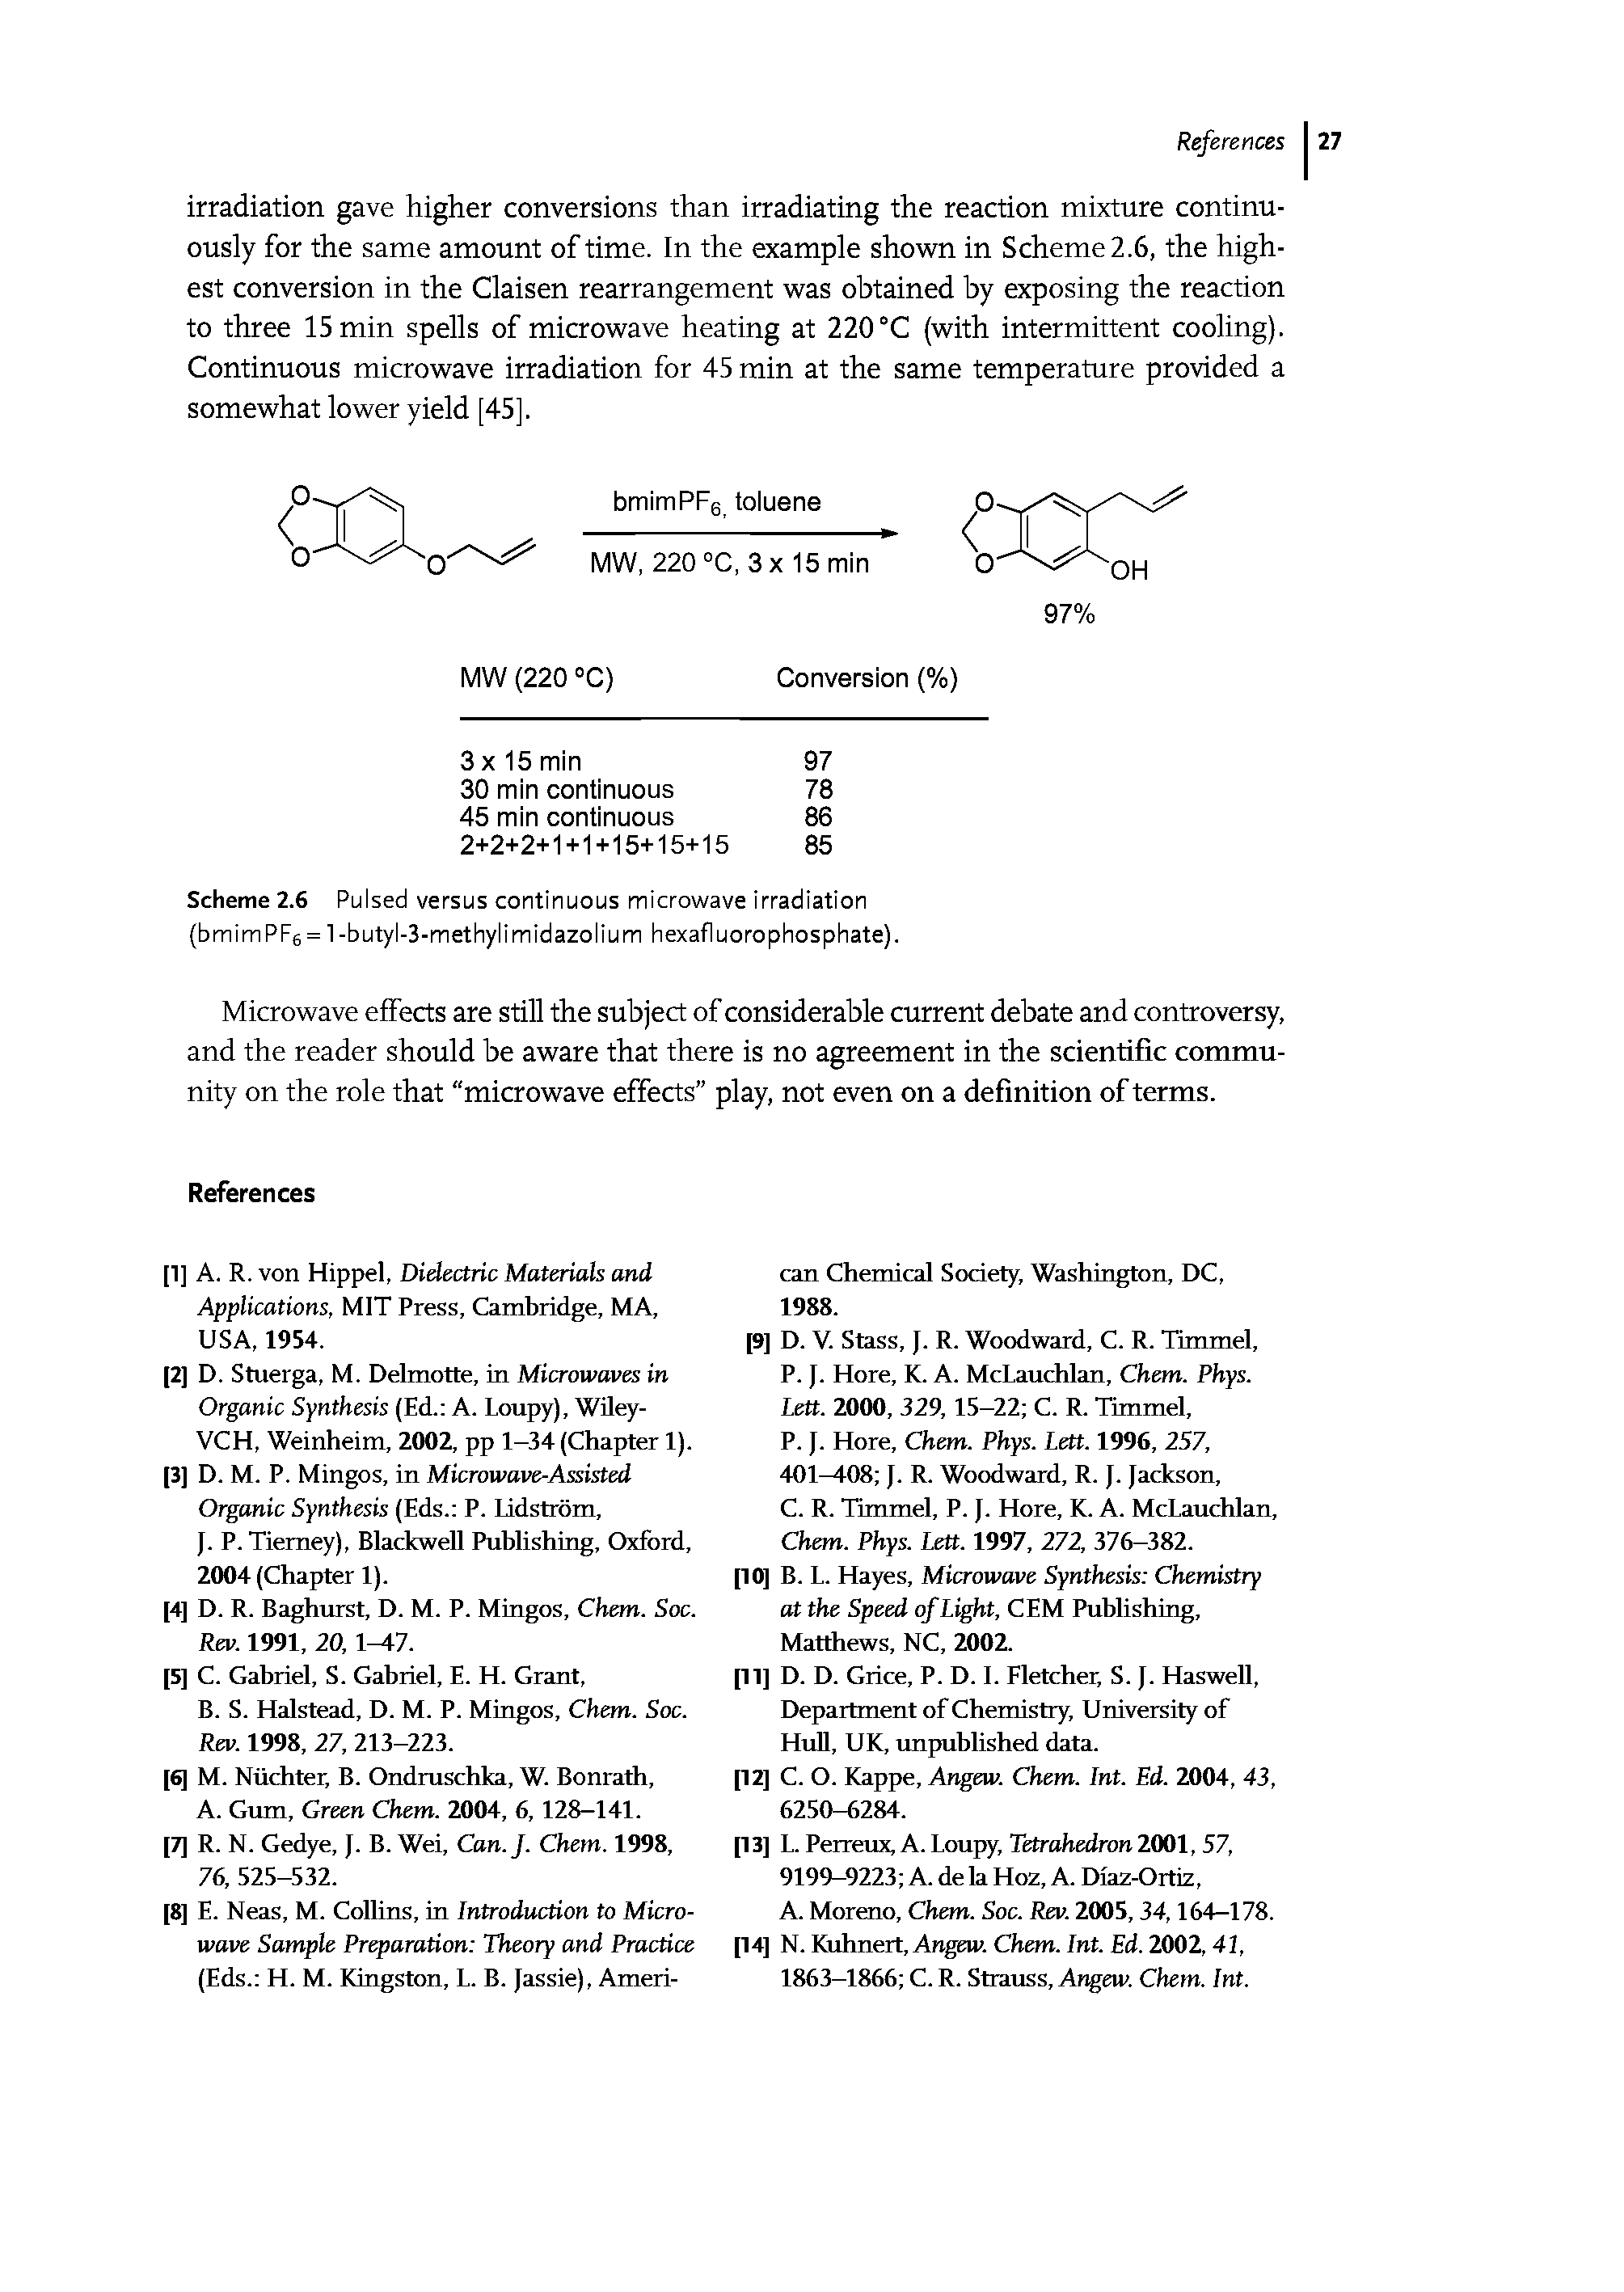 Scheme 2.6 Pulsed versus continuous microwave irradiation (bmimPF6 = l-butyl-3-methylimidazolium hexafluorophosphate).